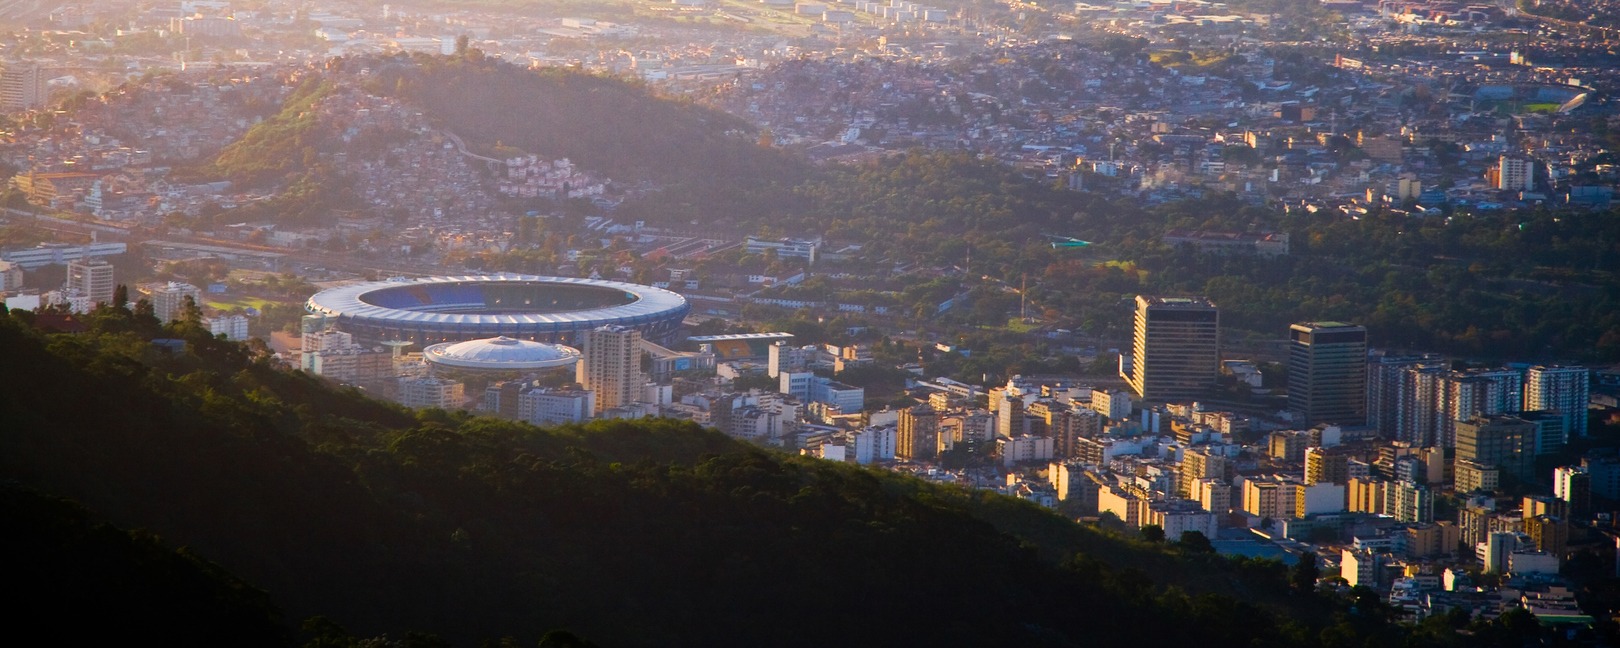 a view of the Maracanã Stadium in Rio de Janeiro